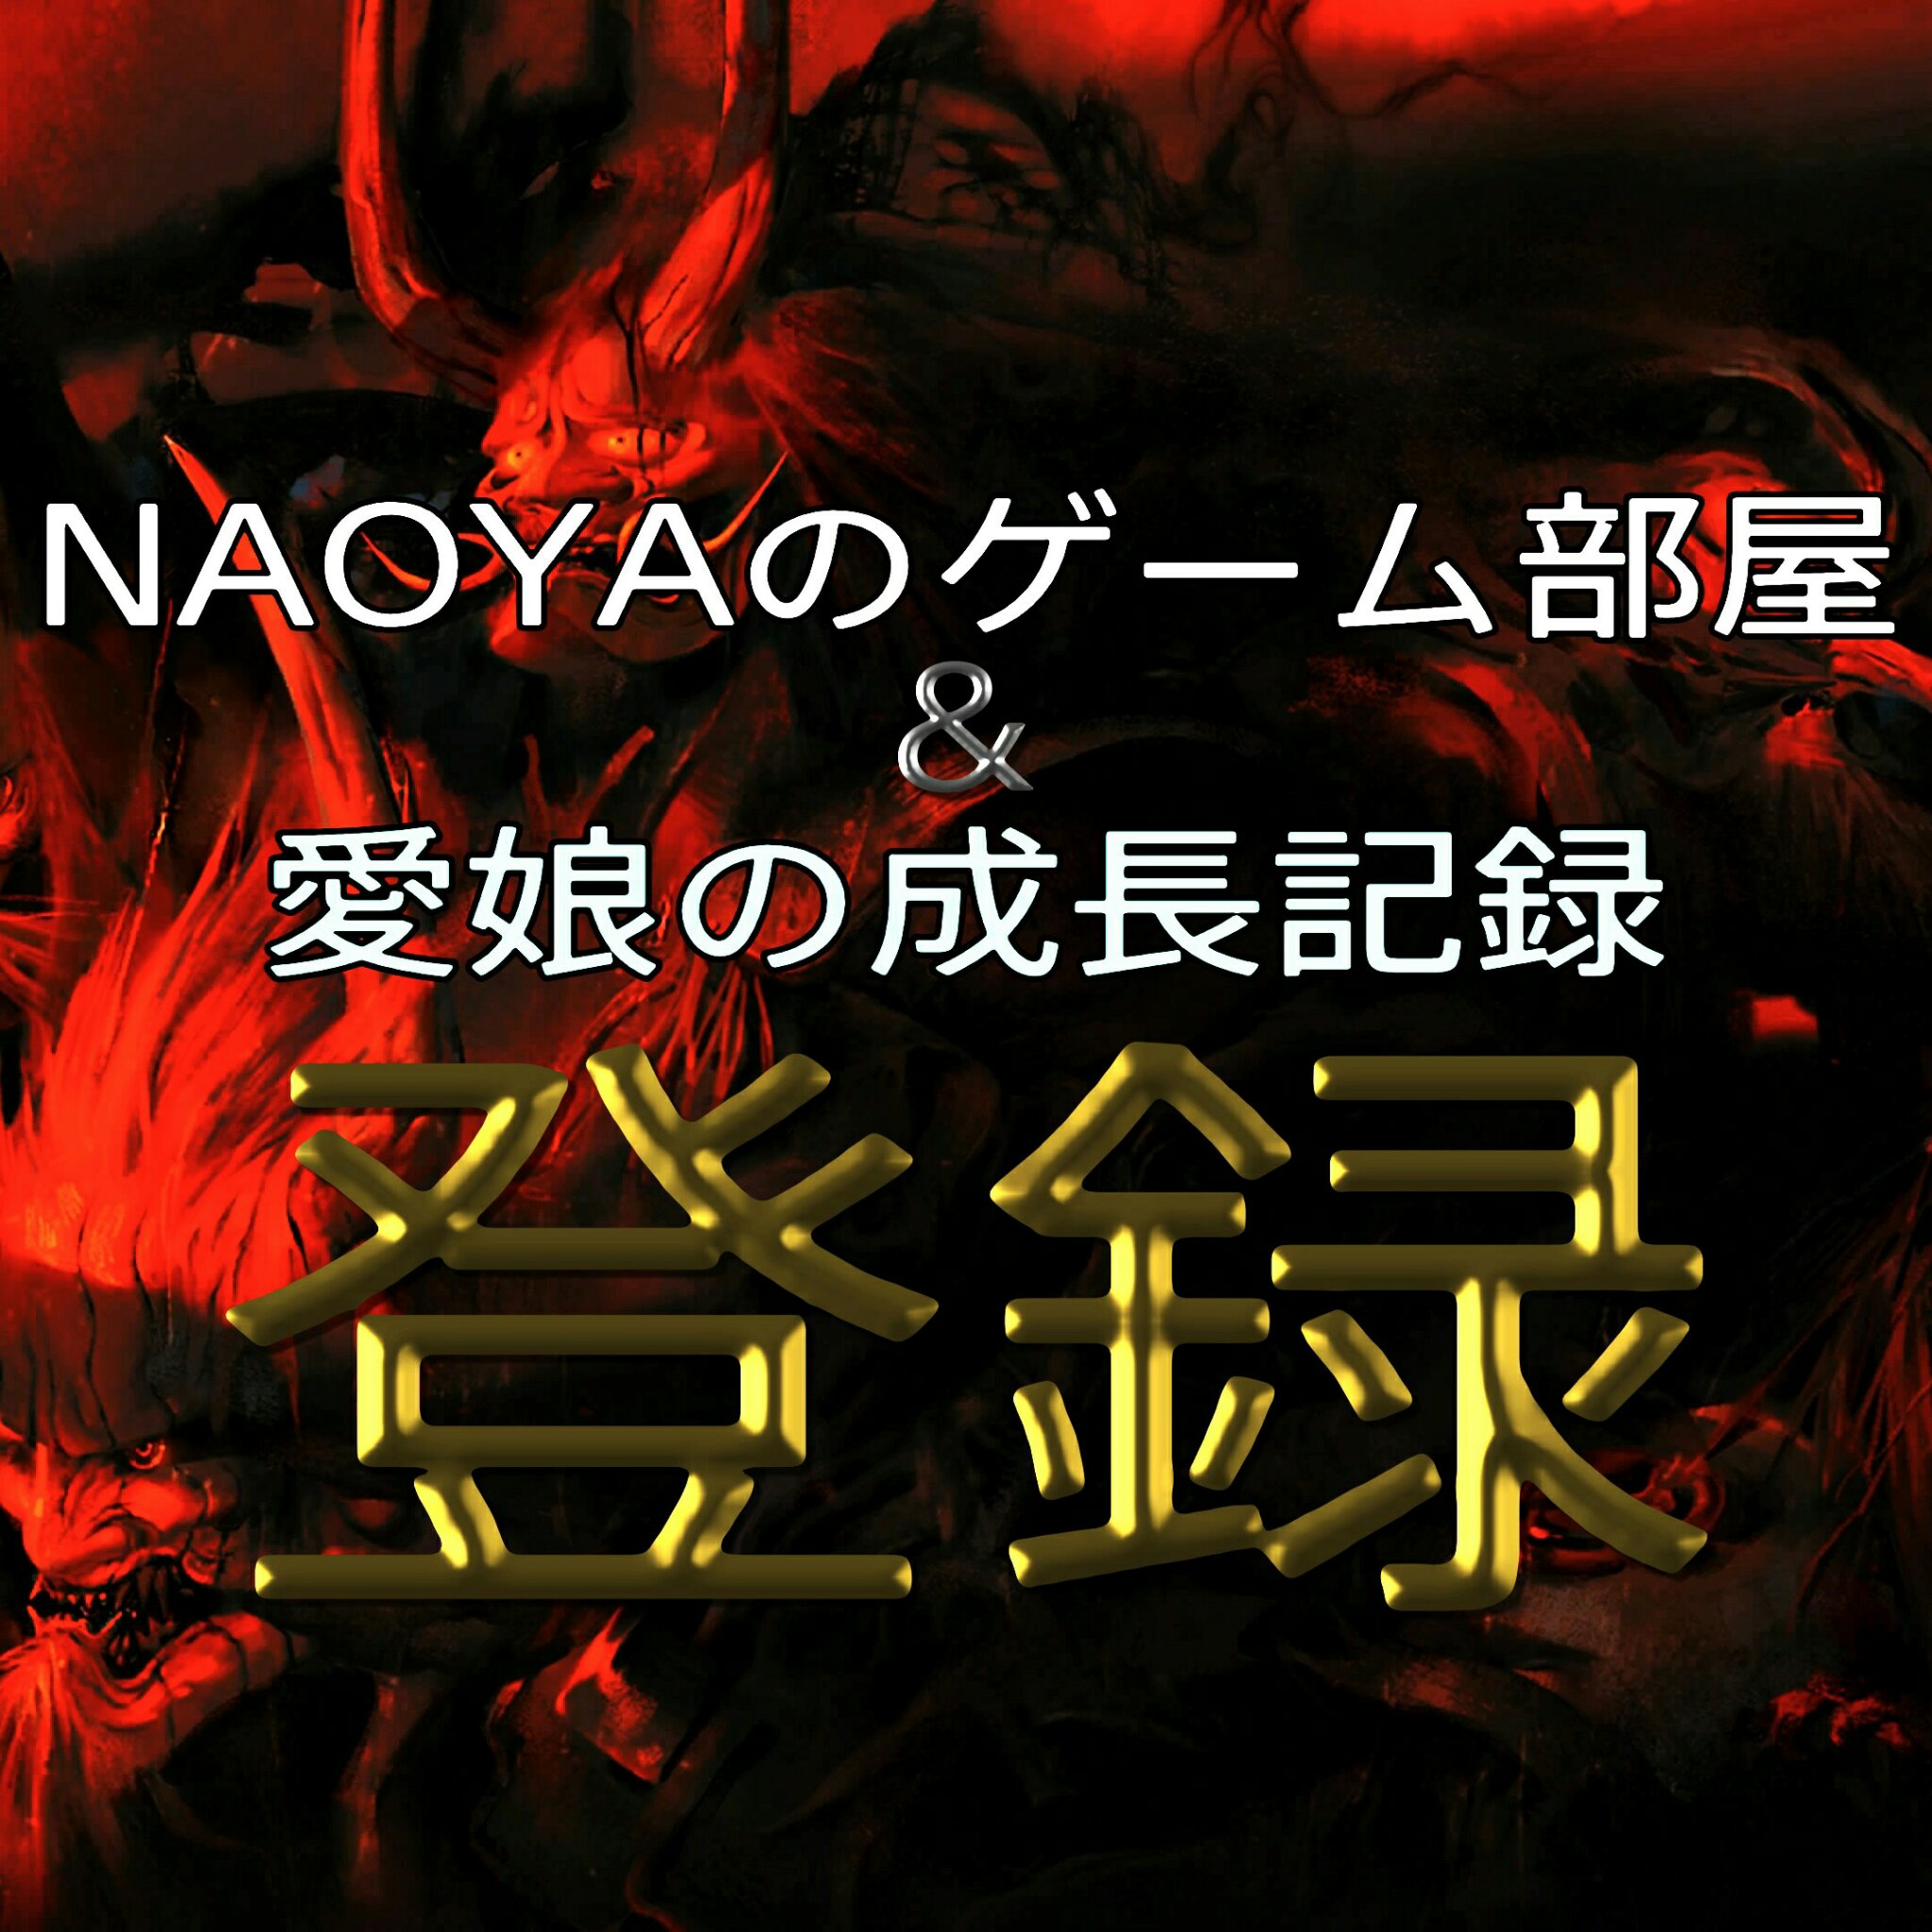 Naoyaのゲーム実況チャンネル Naoya5513 5513 Twitter